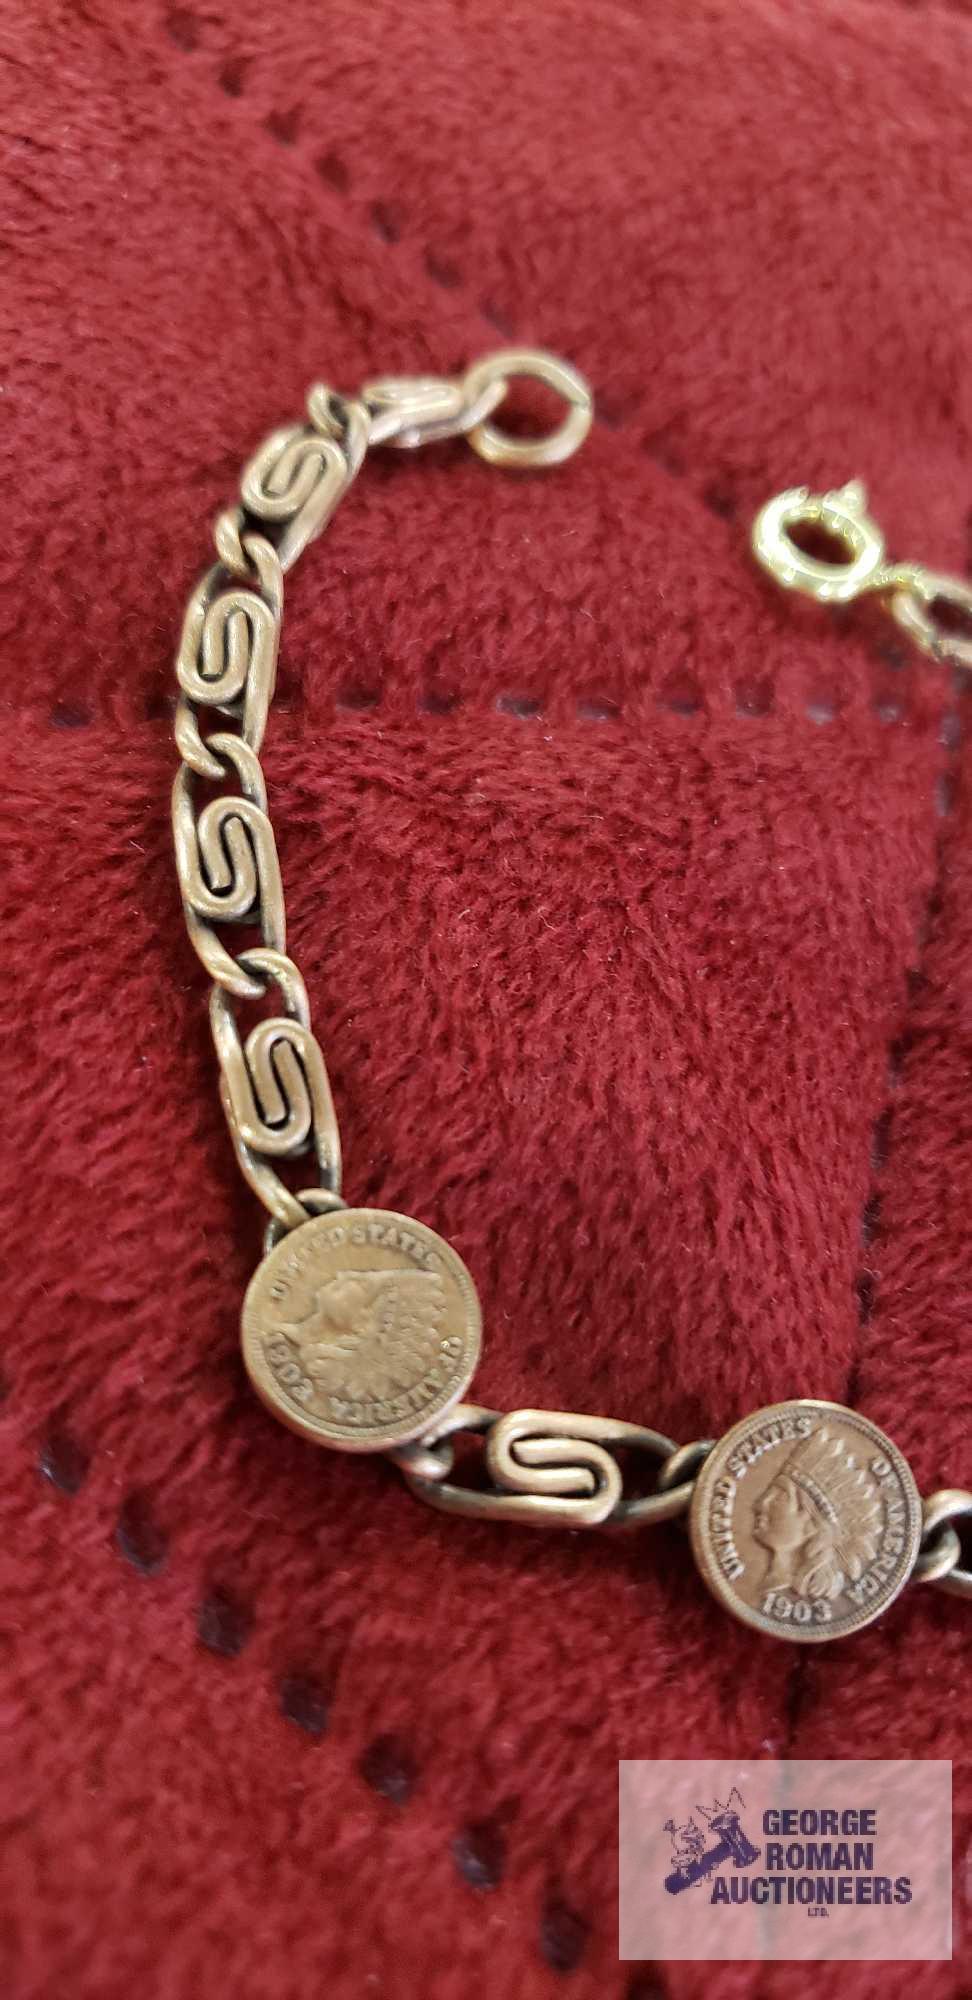 Copper colored replica coins...decorative bracelet